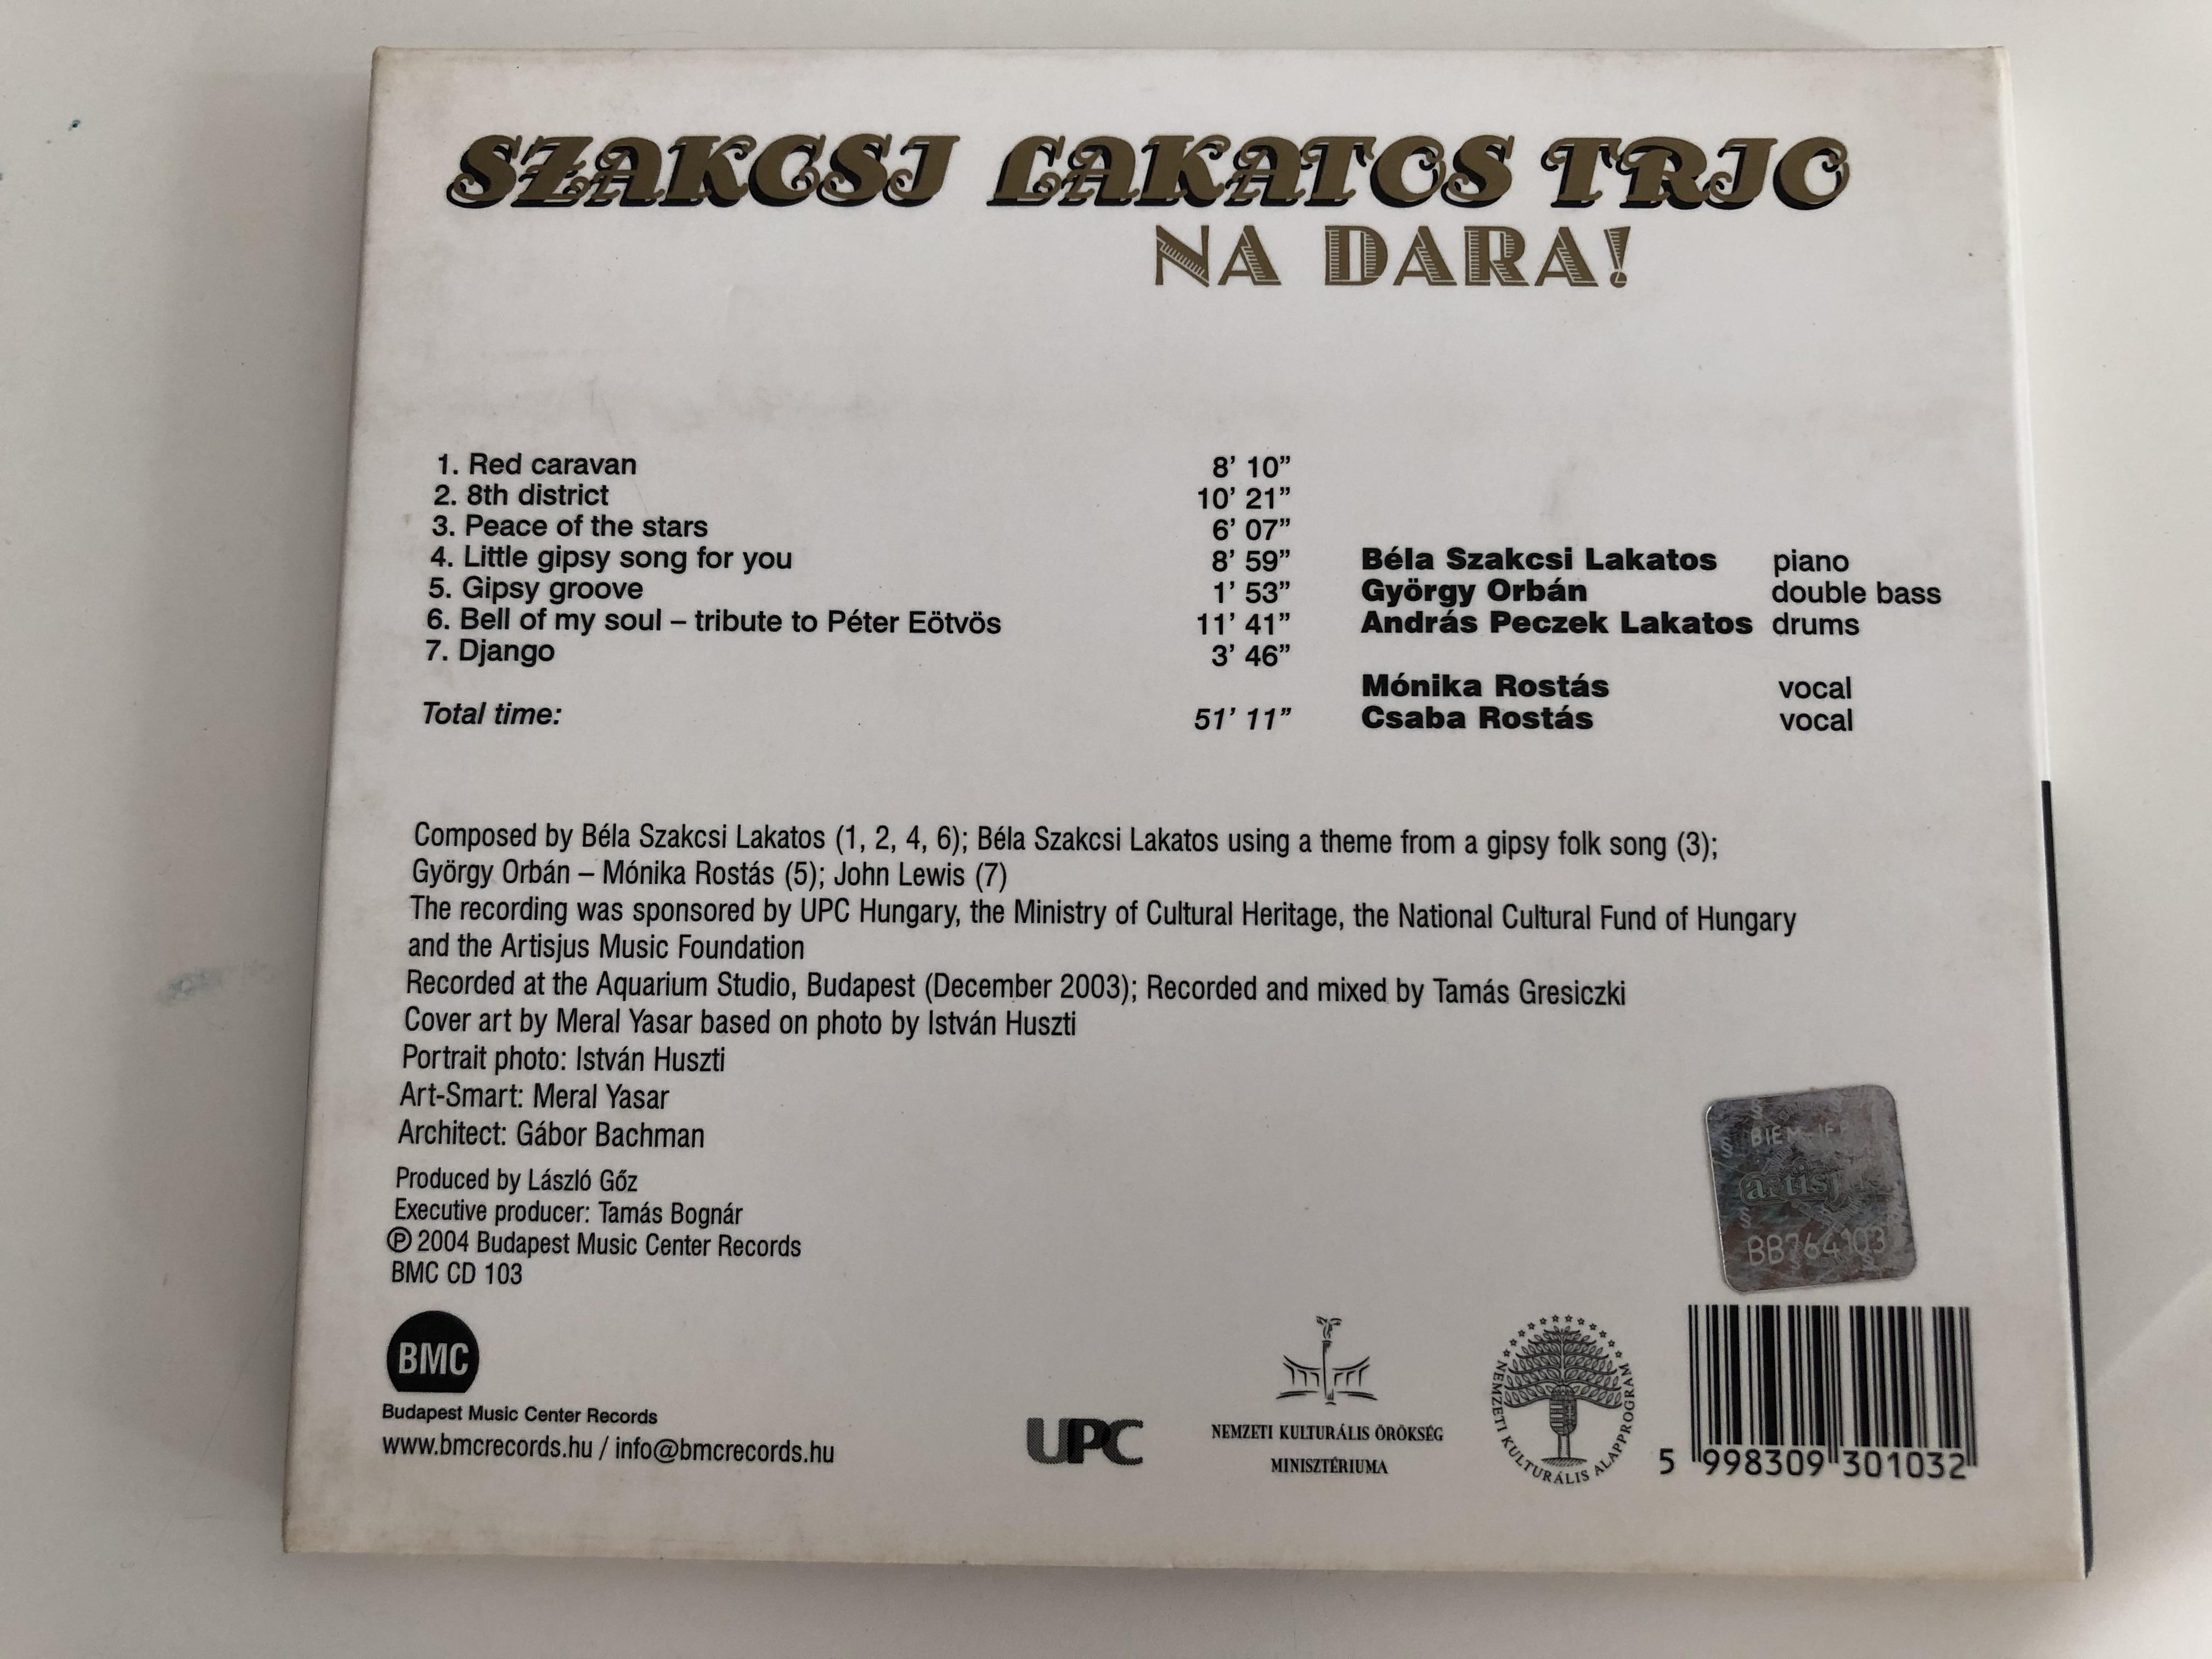 szakcsi-lakatos-trio-na-dara-budapest-music-center-records-audio-cd-2004-bmc-cd-103-10-.jpg